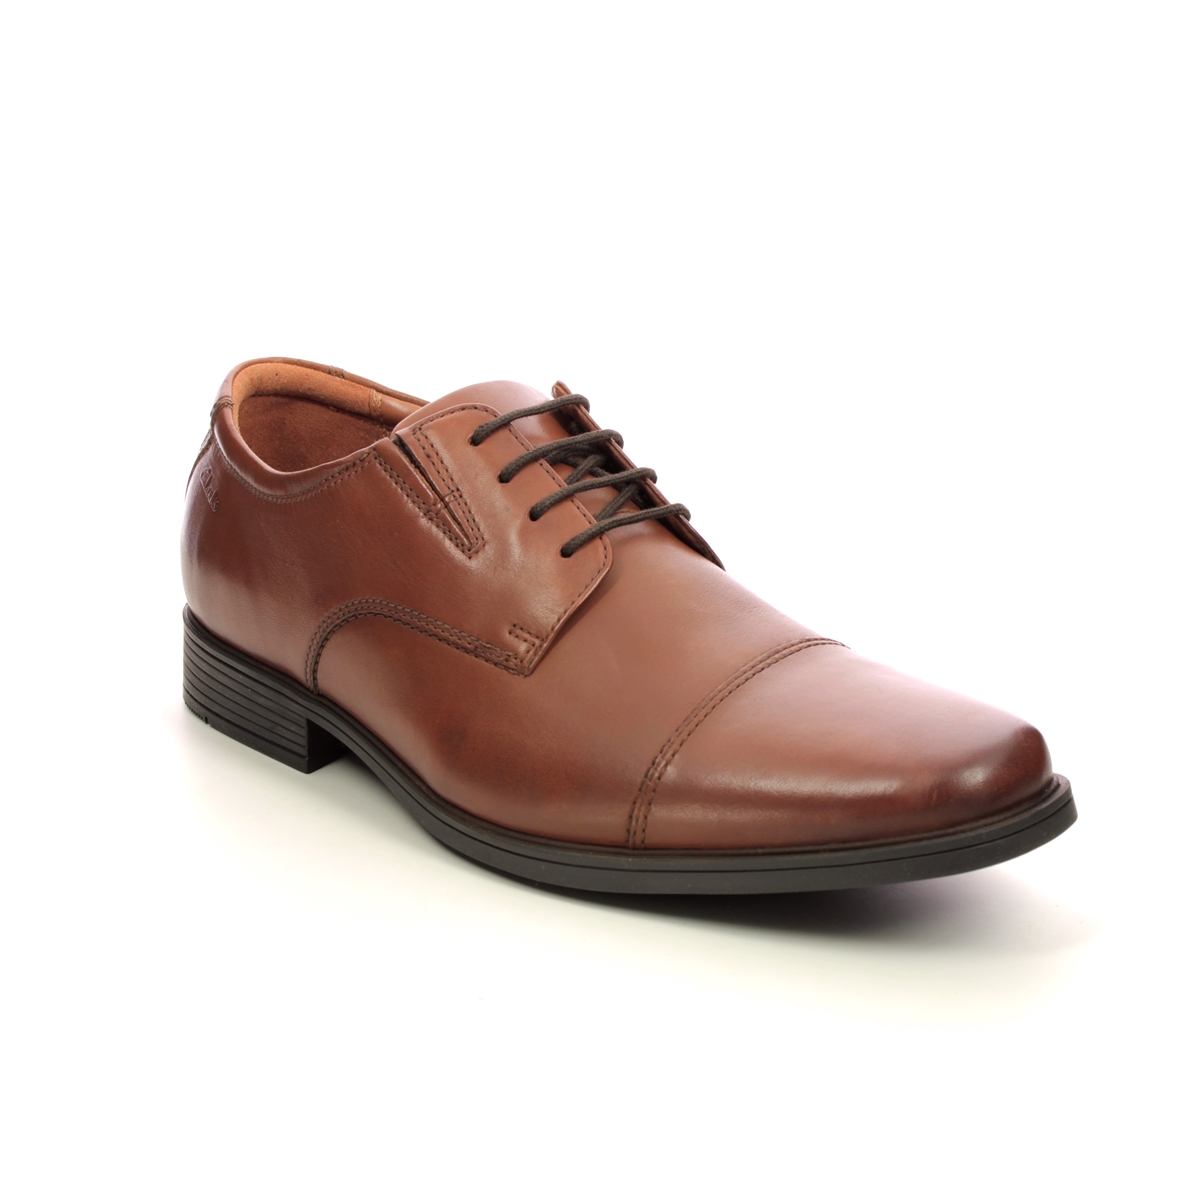 Clarks Tilden Cap Dark Tan Mens Formal Shoes 300968H In Size 9.5 In Plain Dark Tan H Width Fitting Extra Wide